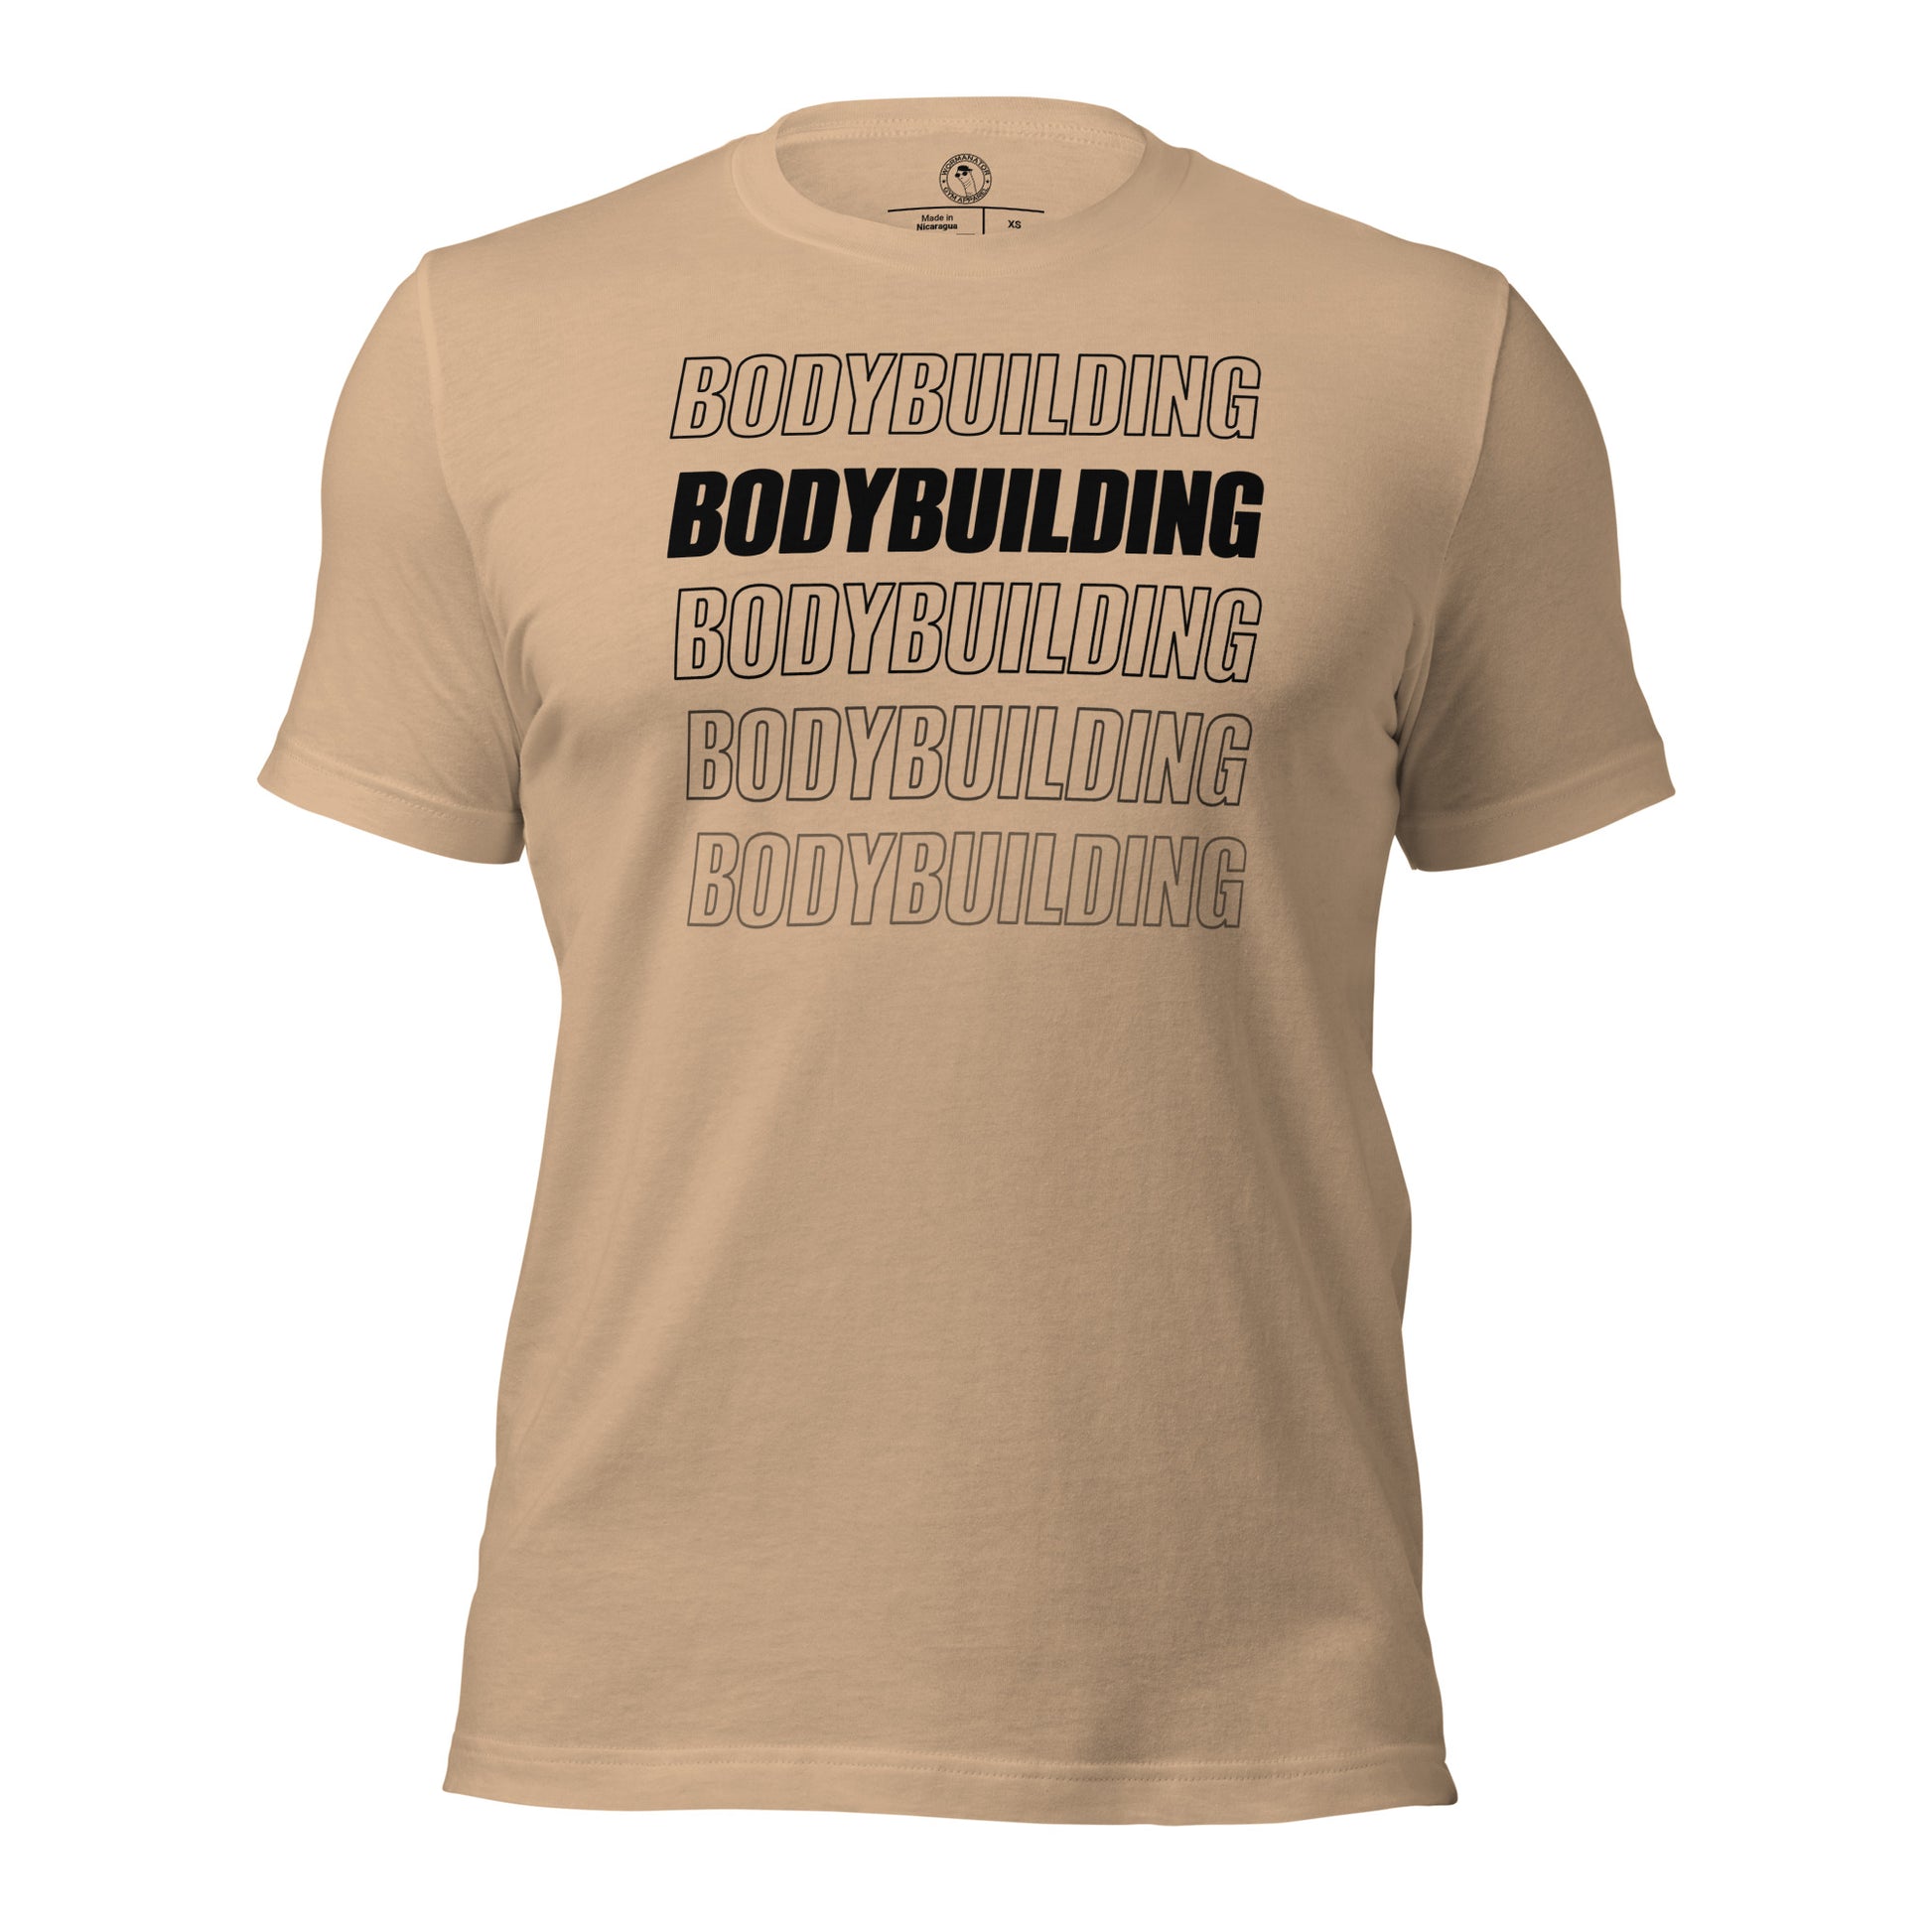 Bodybuilding Shirt in Tan